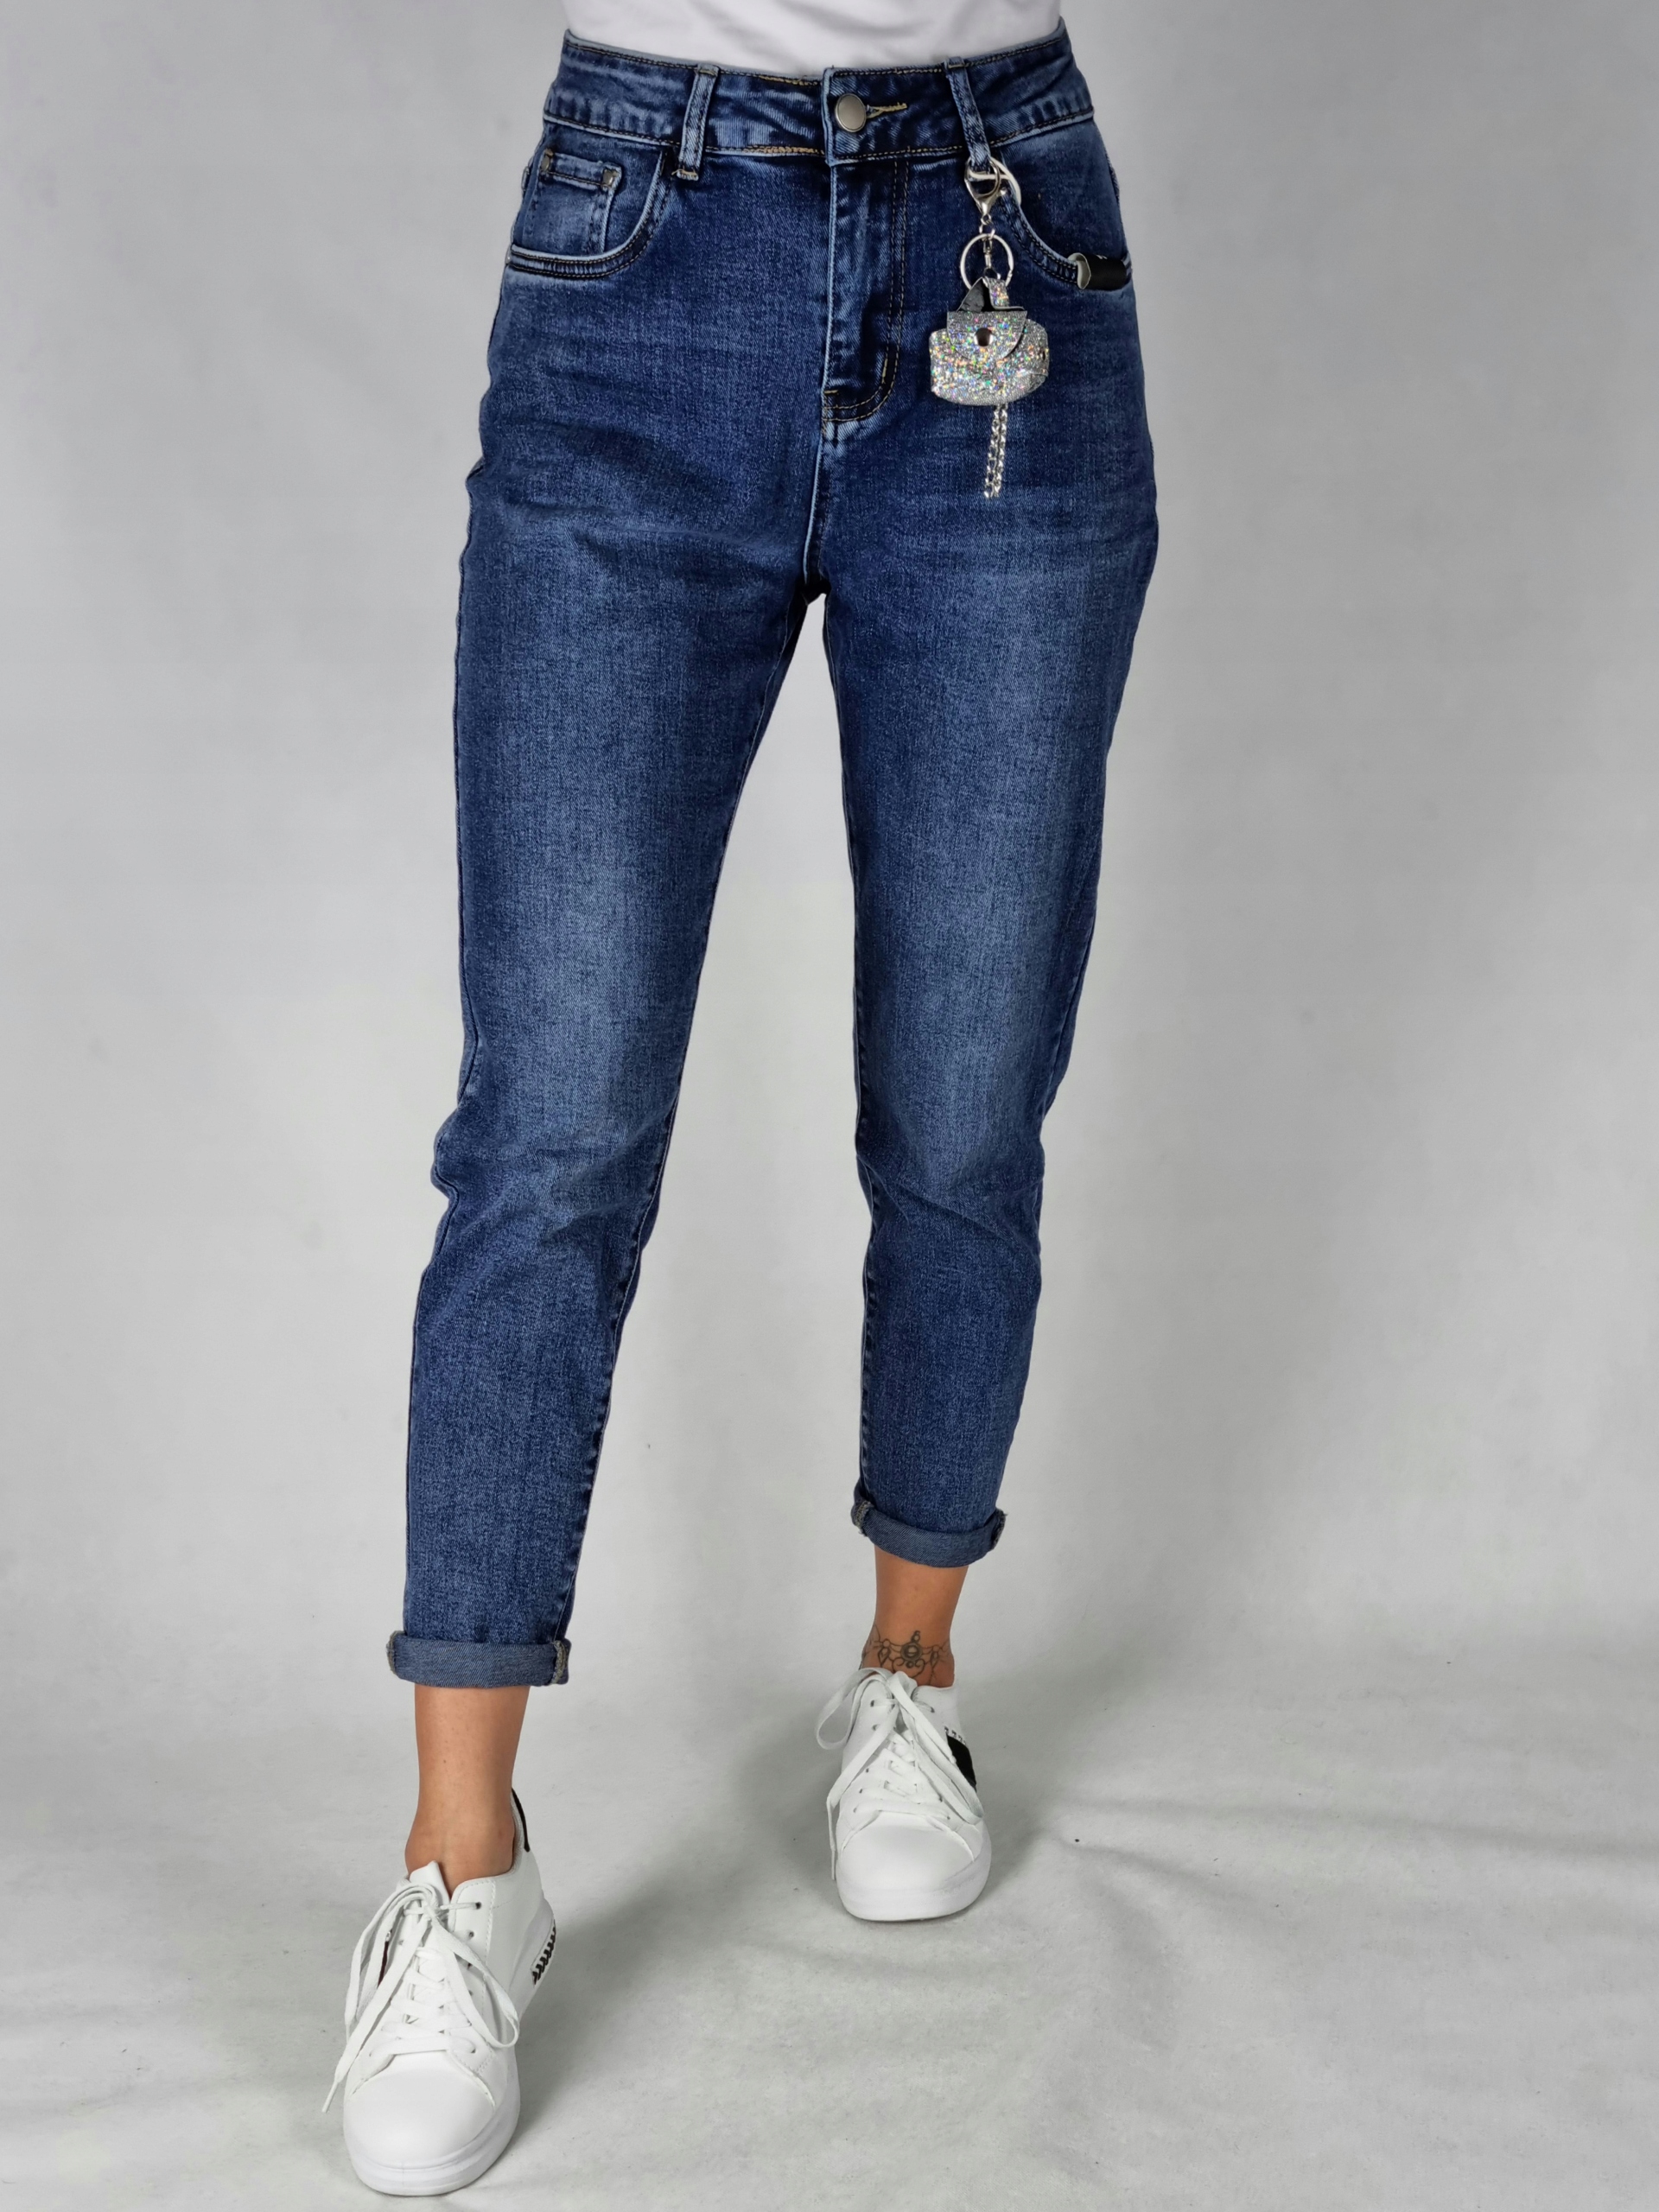 M. SARA BOYFRIEND джинсы брюки размер M размер M